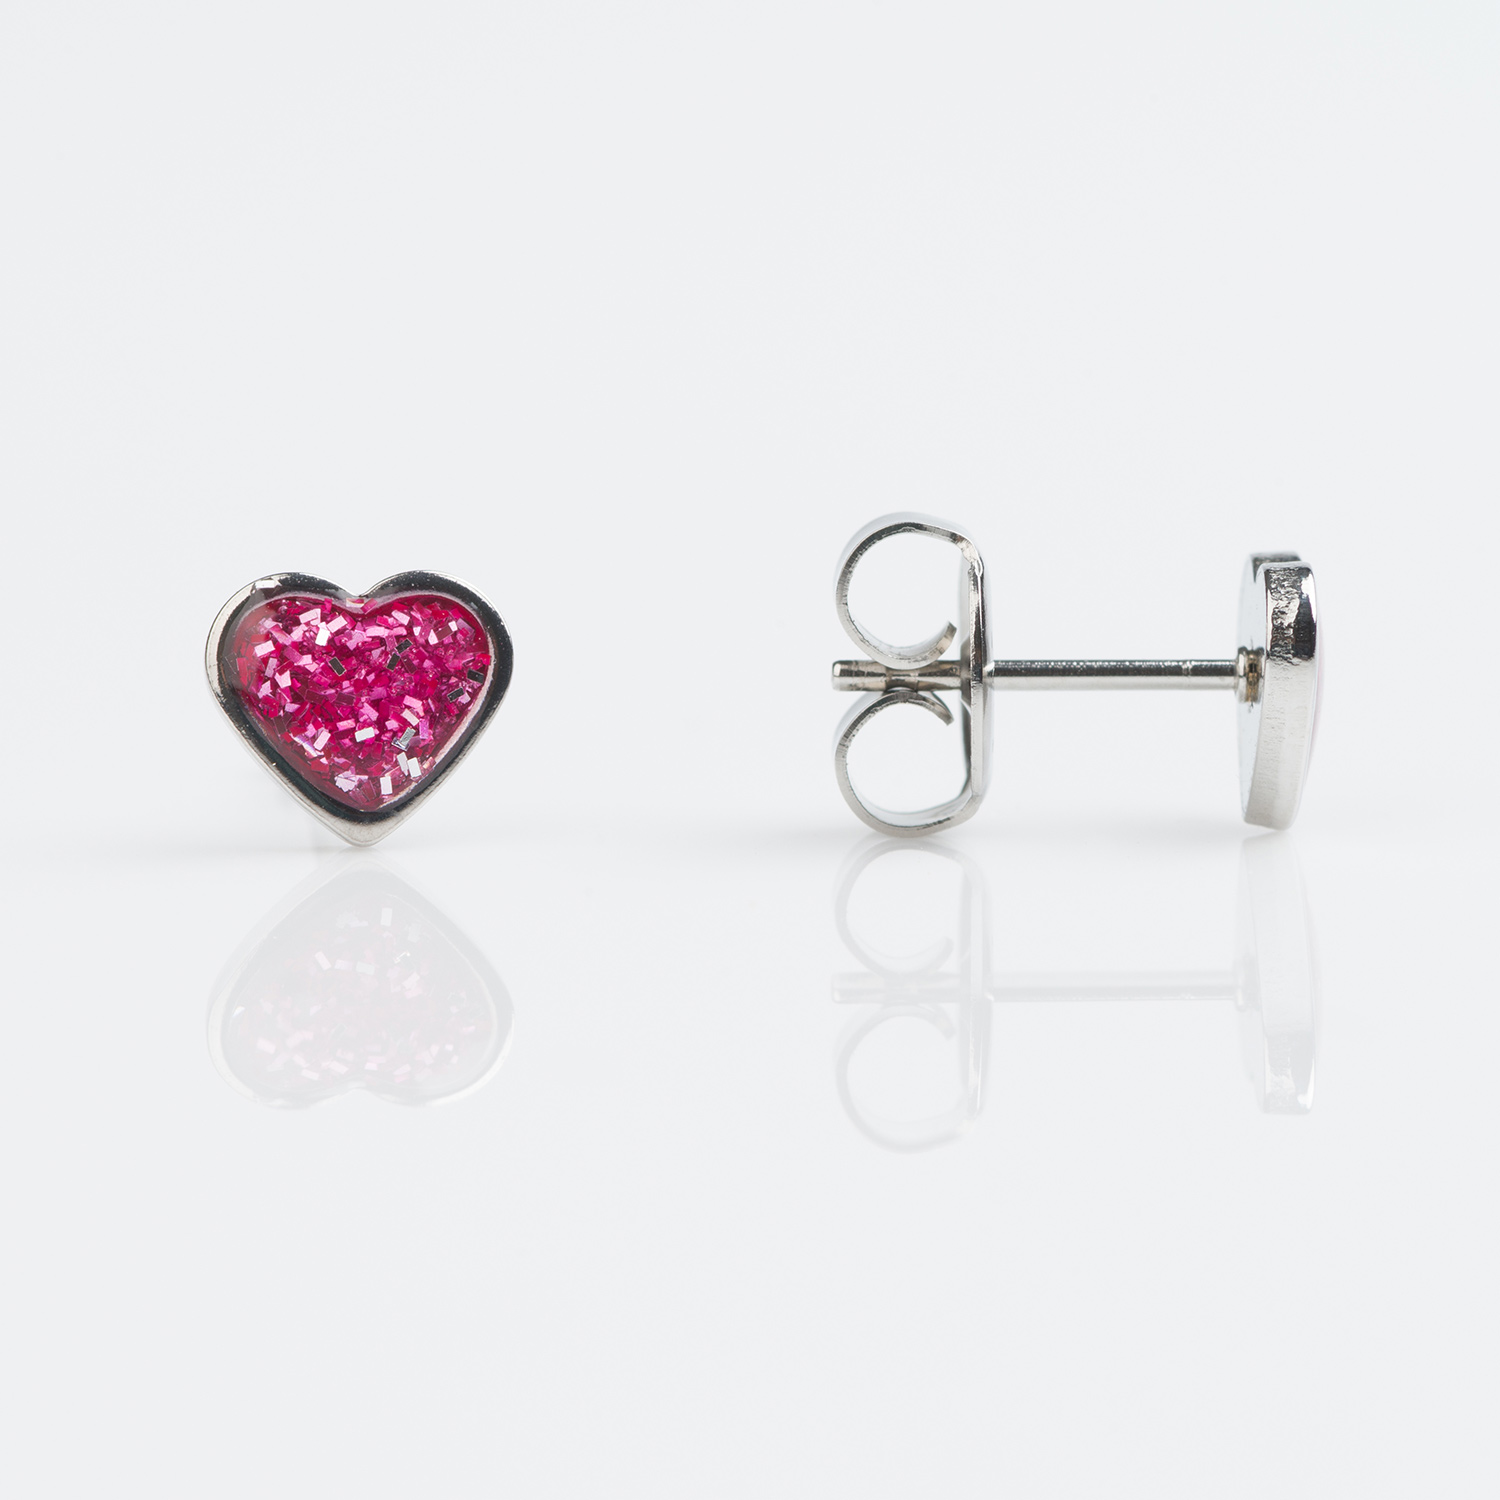 7524-3565 – Studex Stainless Pink Glitter Heart Piercing Earrings